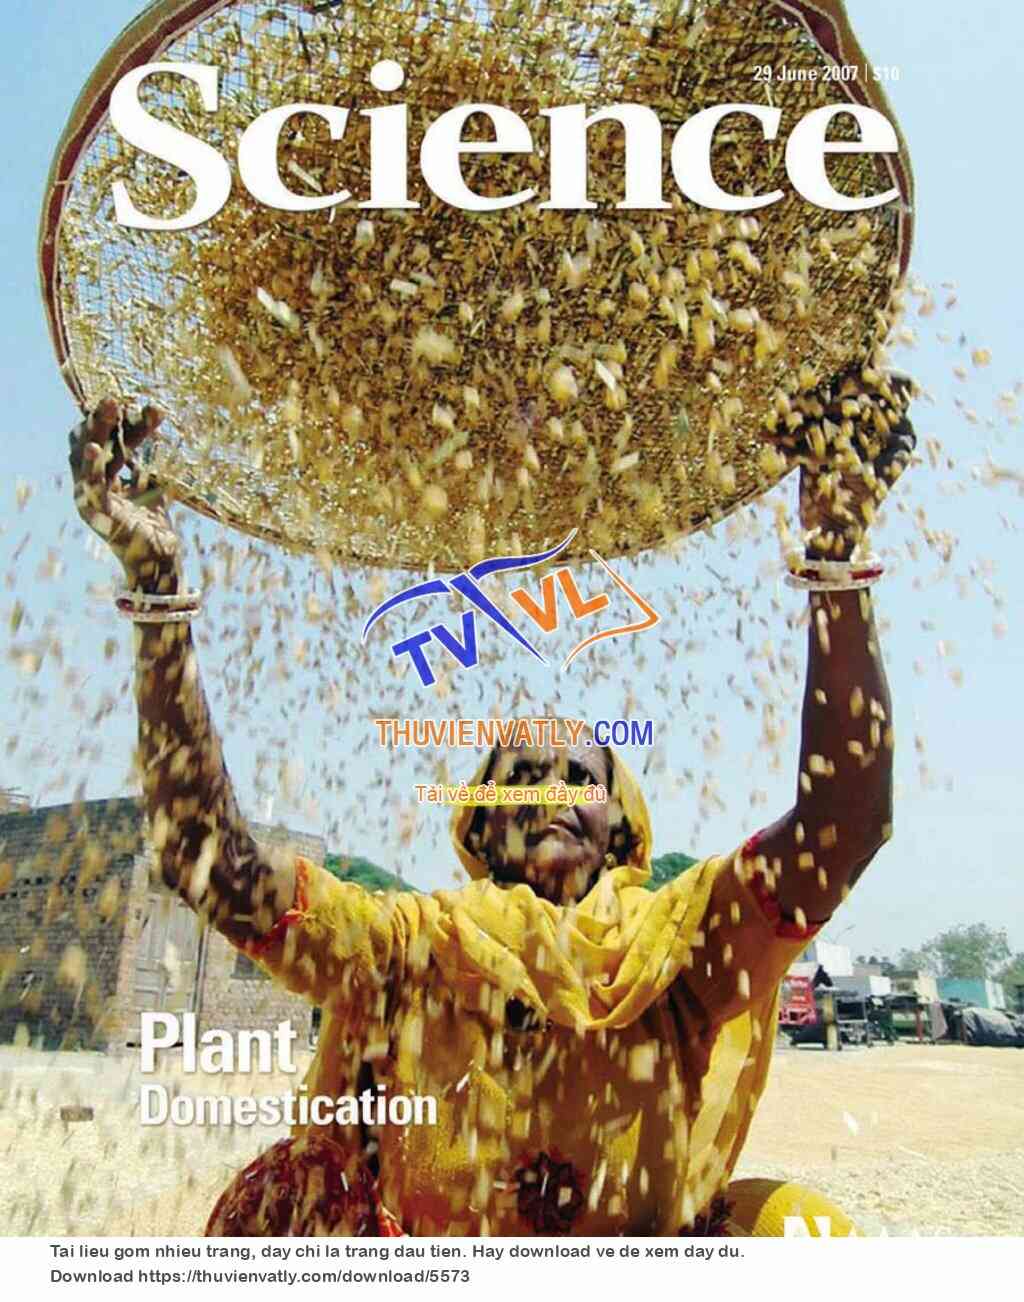 Science Magazine_2007-06-29